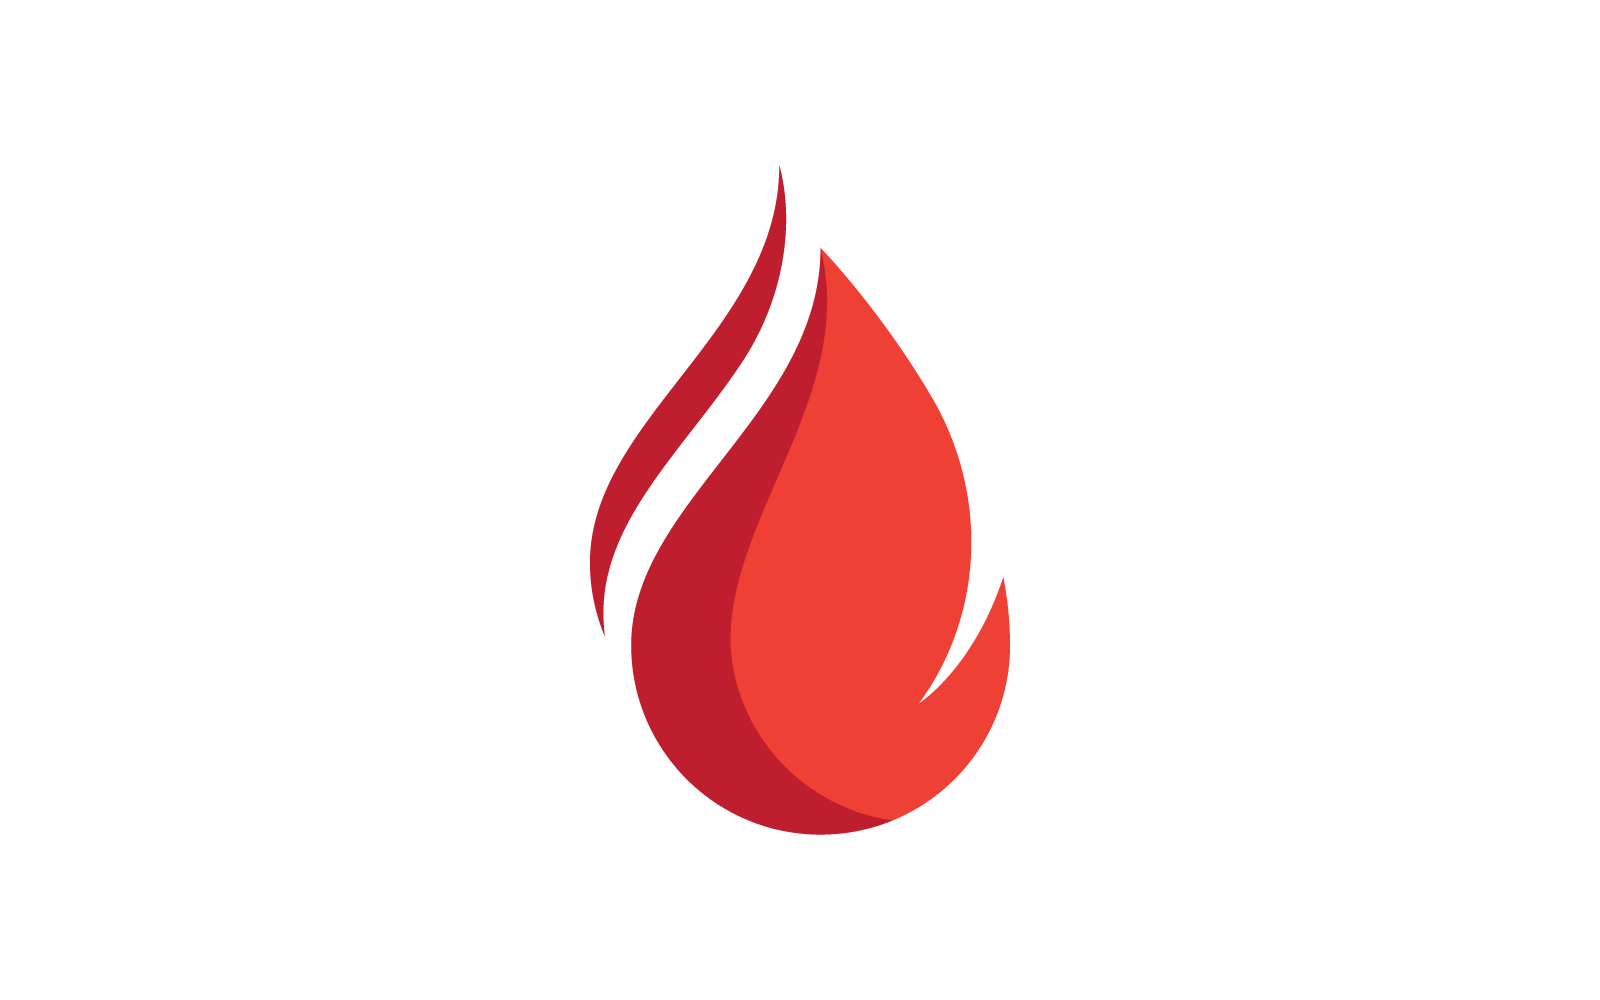 Fire flame illustration design logo Template